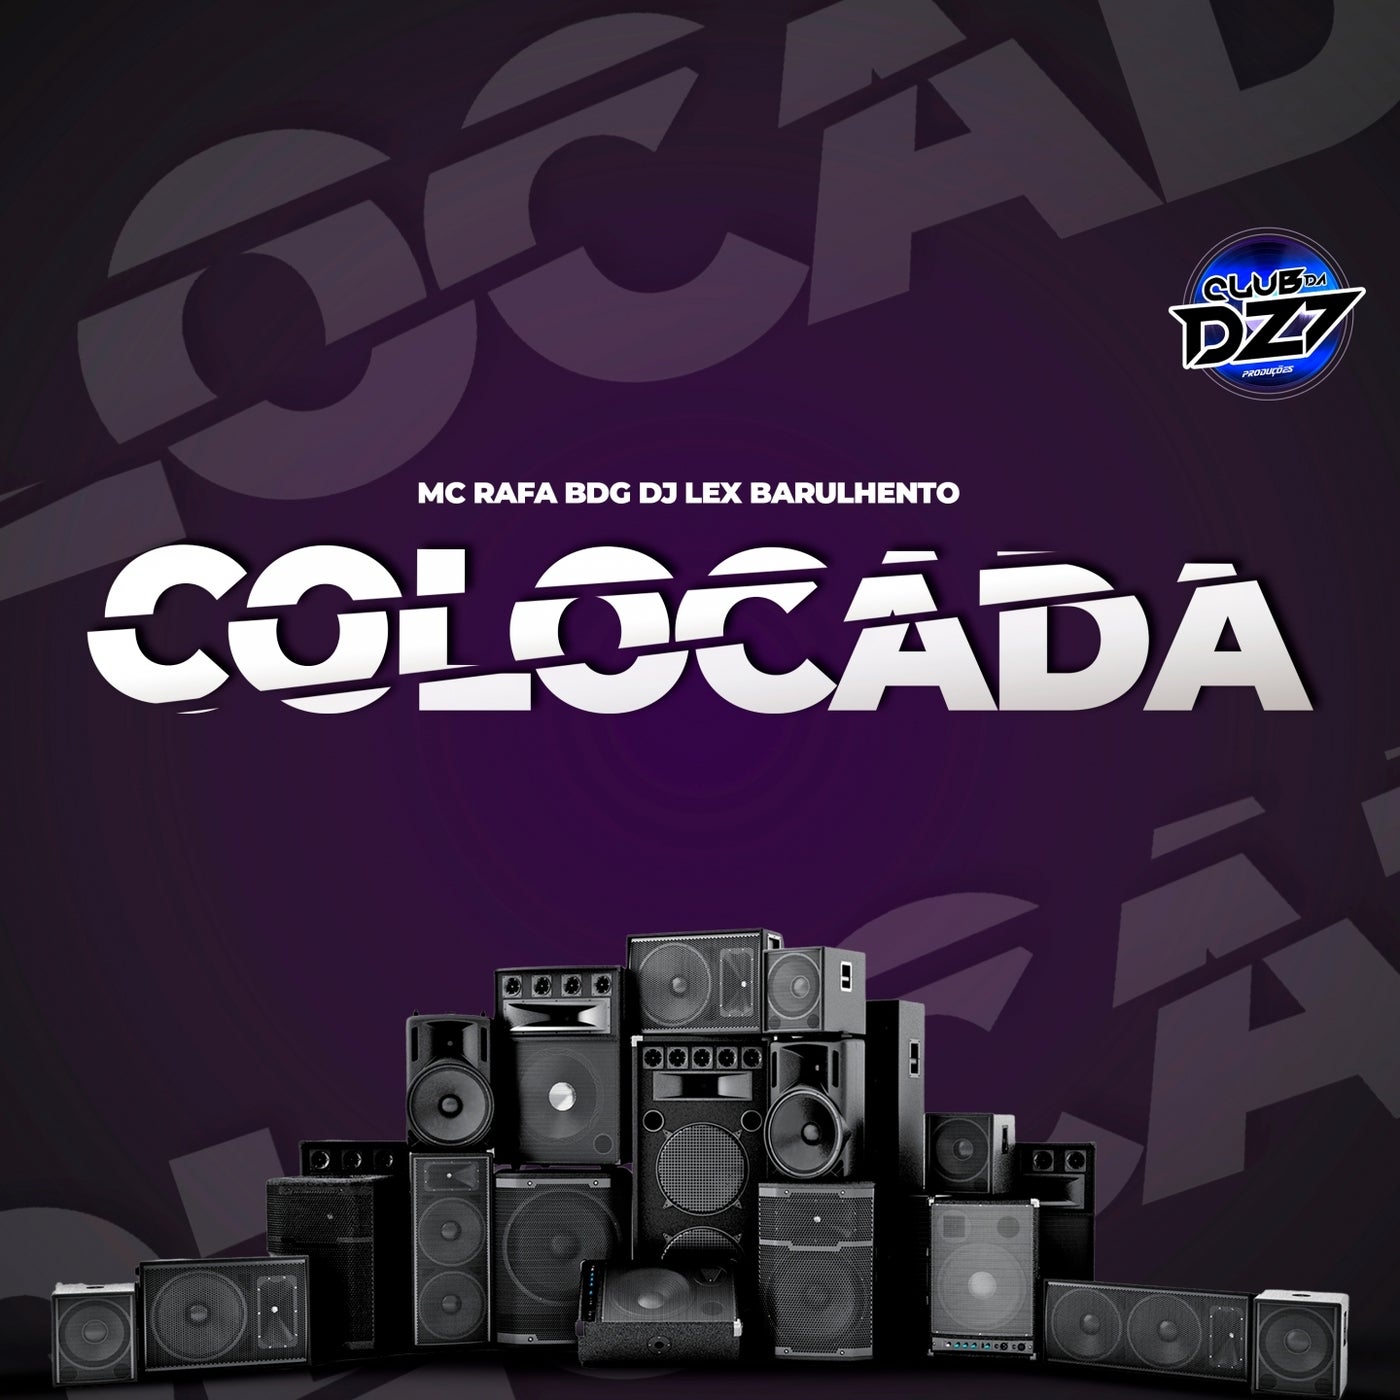 Colocada By Club Da Dz7 Dj Lex Barulhento And Mc Rafa Bdg On Beatsource